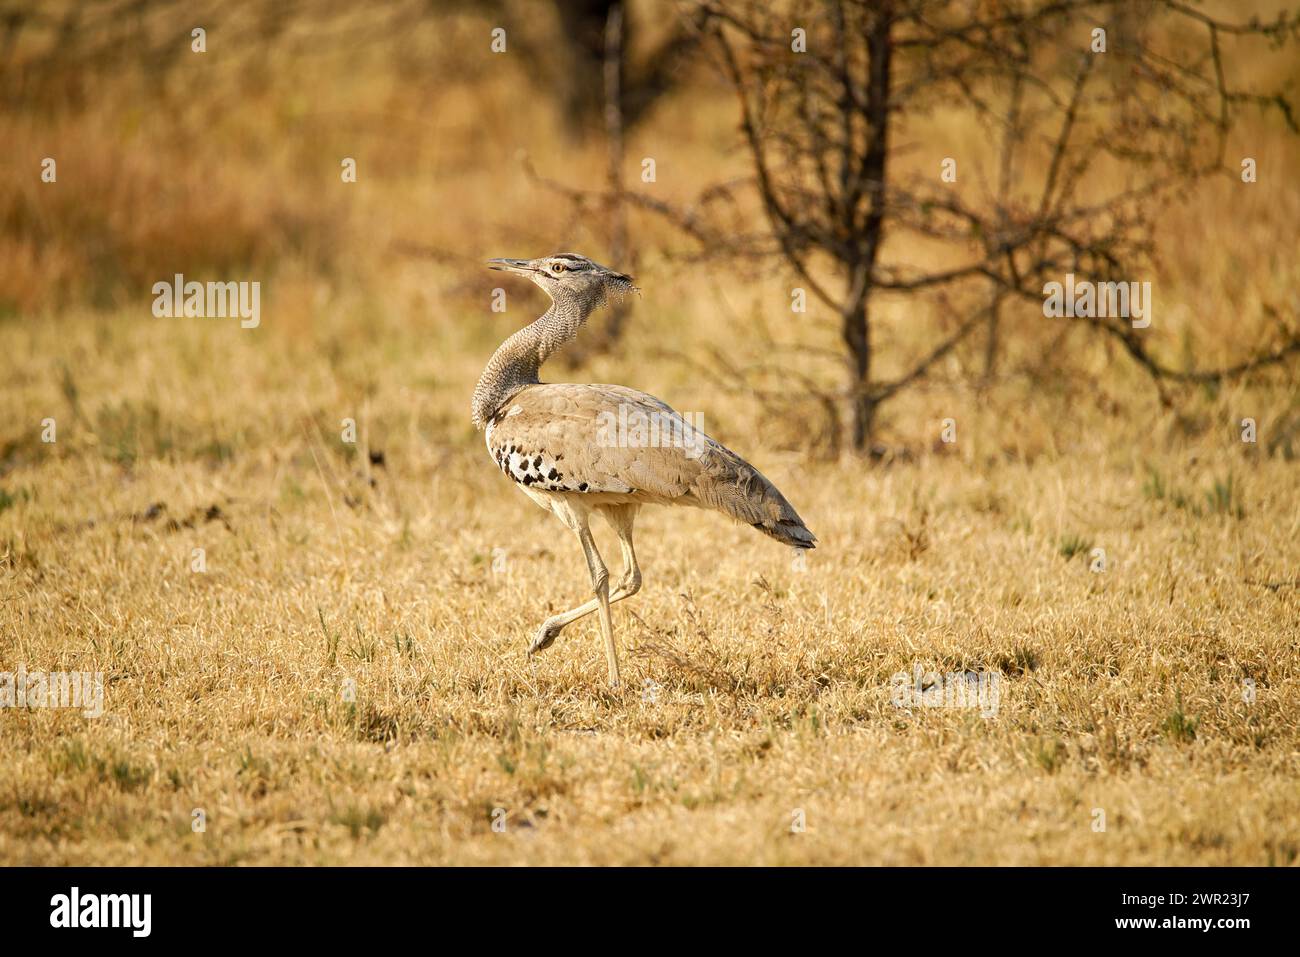 A Kori Bustard walking through short grasslands on the plains of Africa. Stock Photo